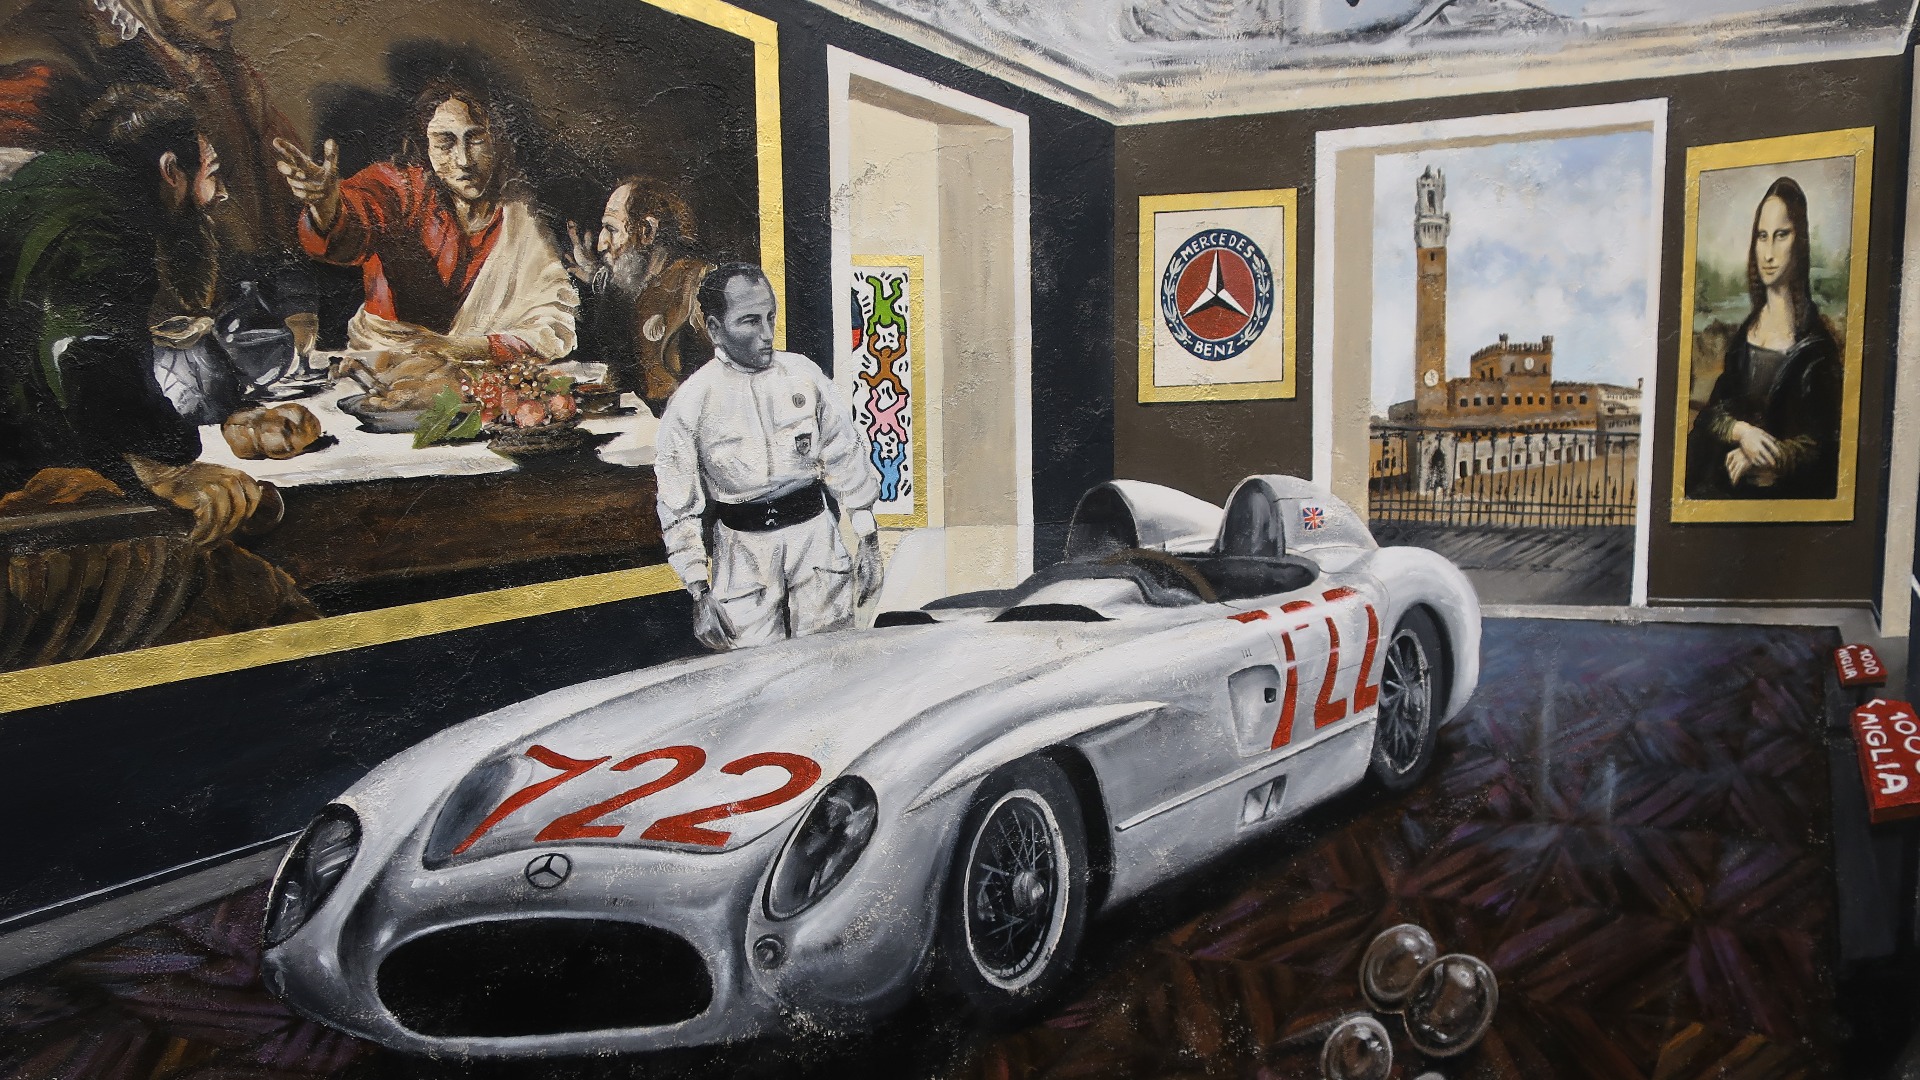 Her har Ferencz Olivier malt Stirling Moss i Mille Miglia 1955 og hans Mercedes 300 SLR, men vi ser også verker fra Merisi Caravaggio, Leonardo da Vinci og Keith Haring omkranse det he